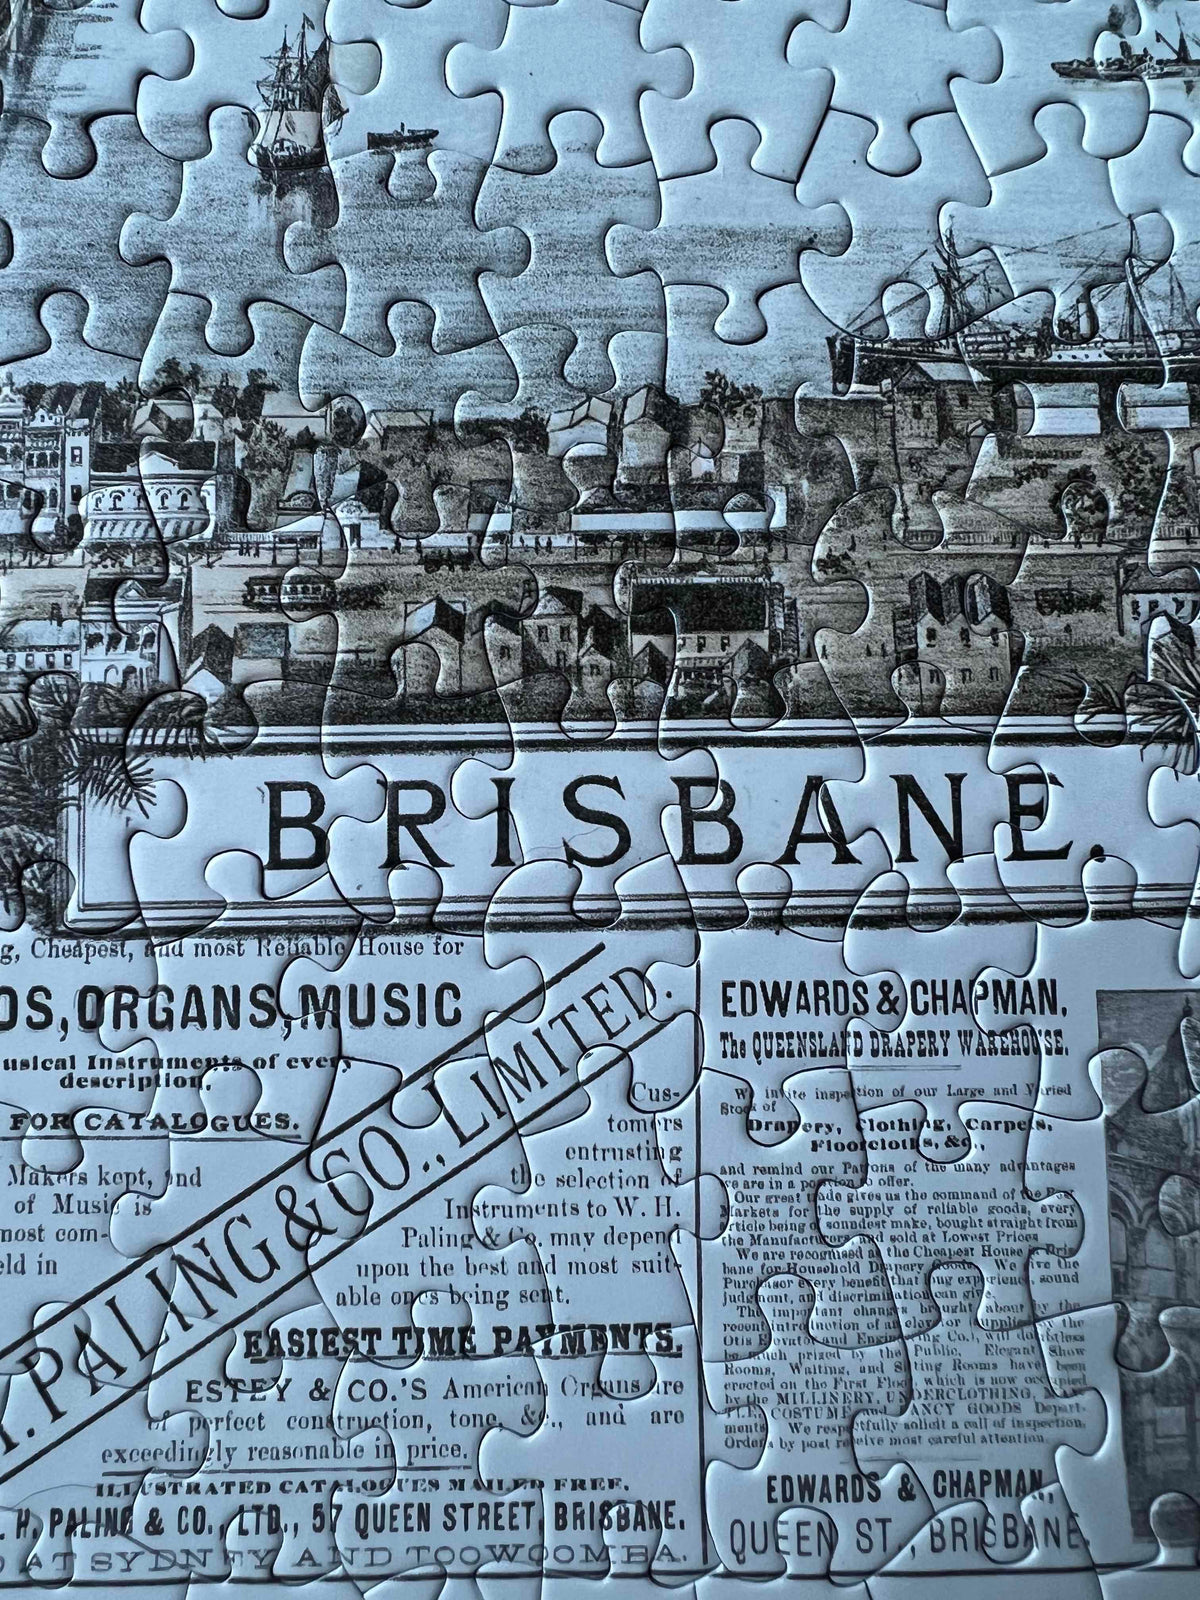 The Brisbane Map